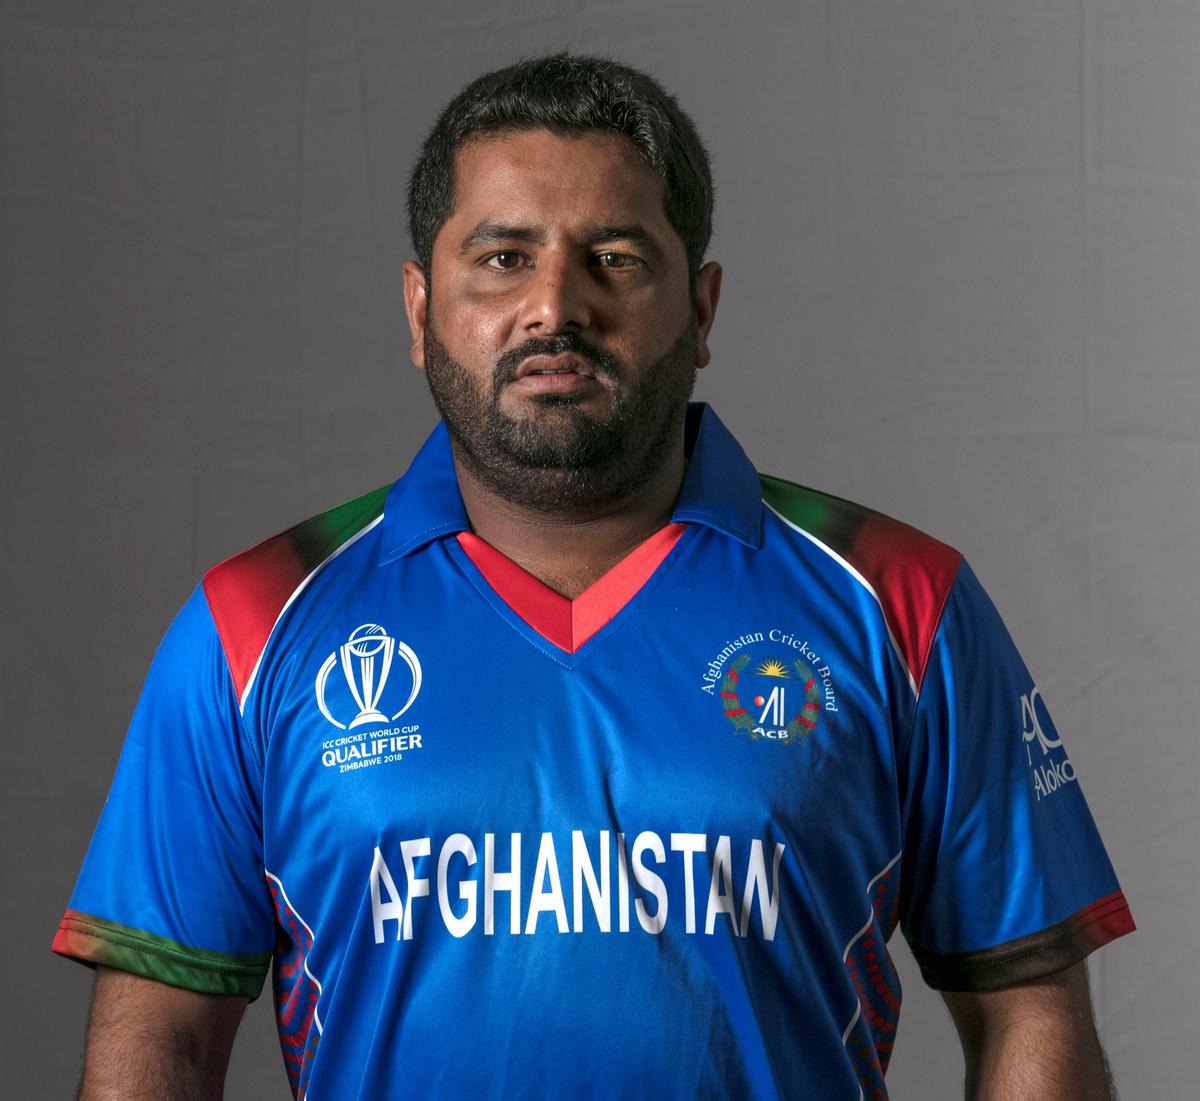 afghanistan cricket jersey